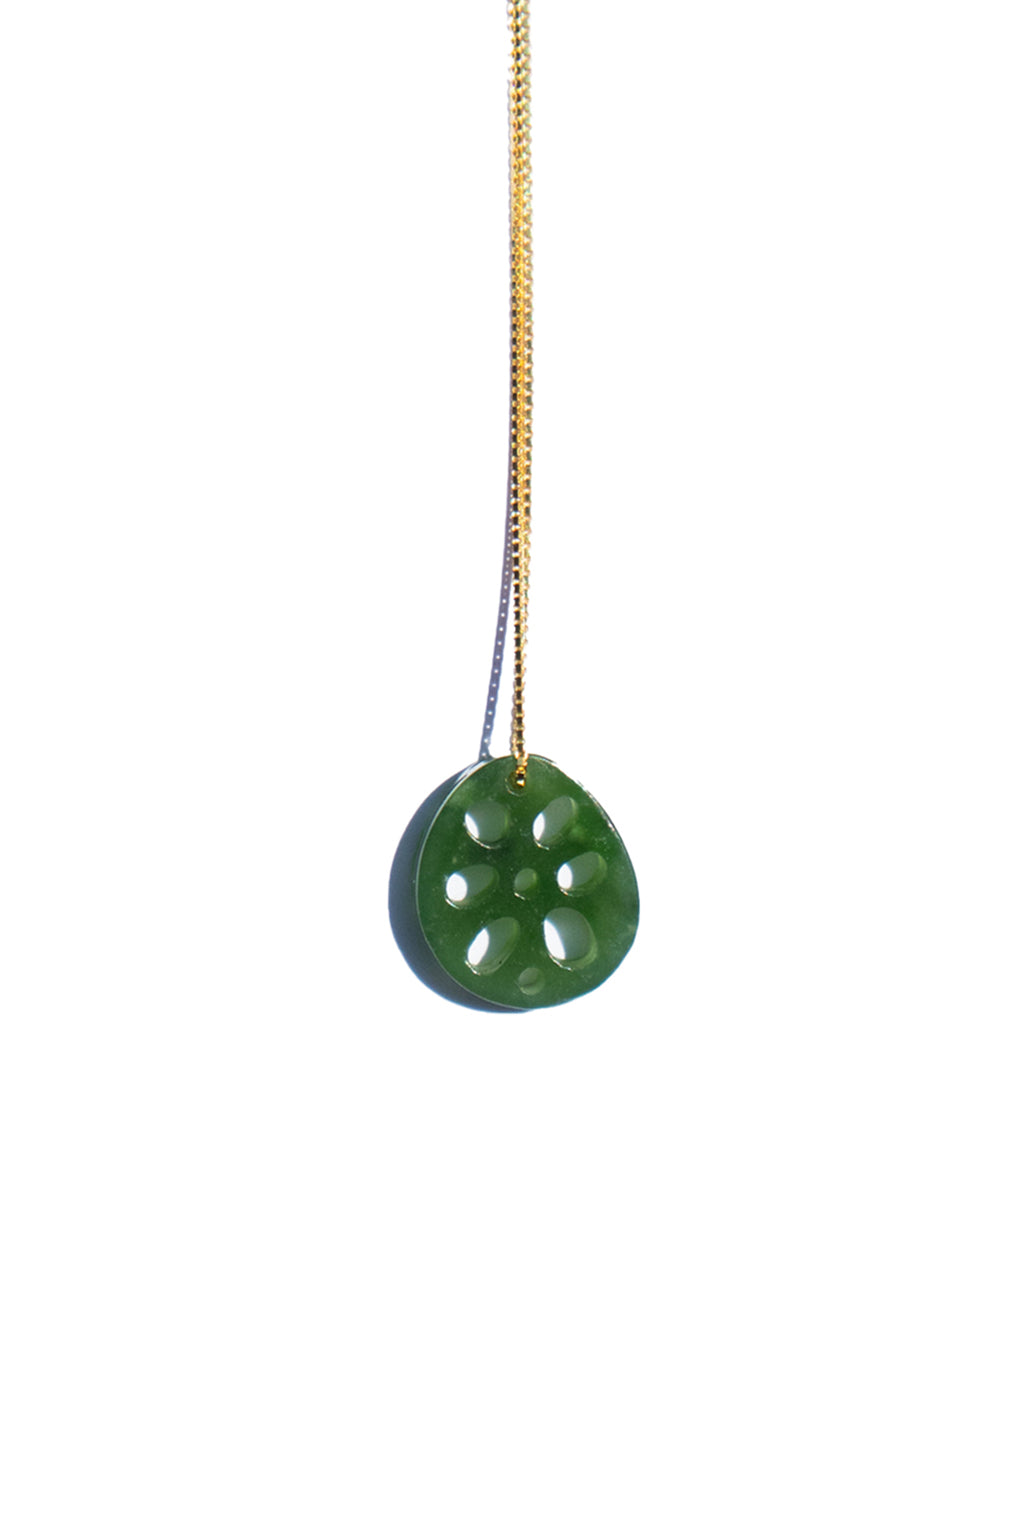 seree-mala-project-lotus-root-nephrite-jade-pendant-necklace-green